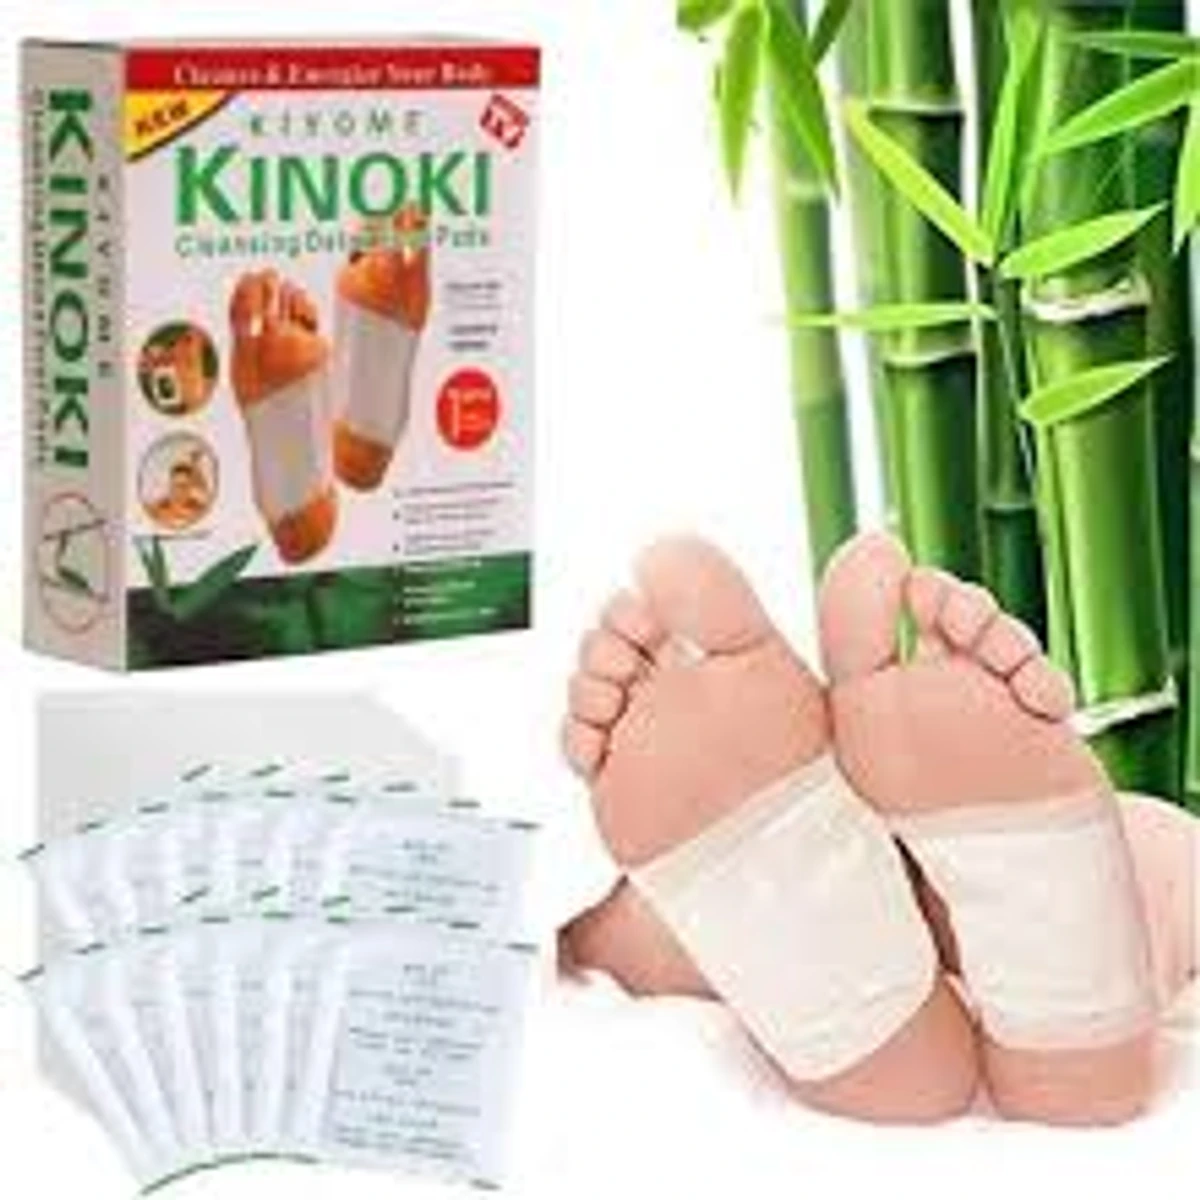 Original kinoki detox foot pad 1 Packet (10 pcs )